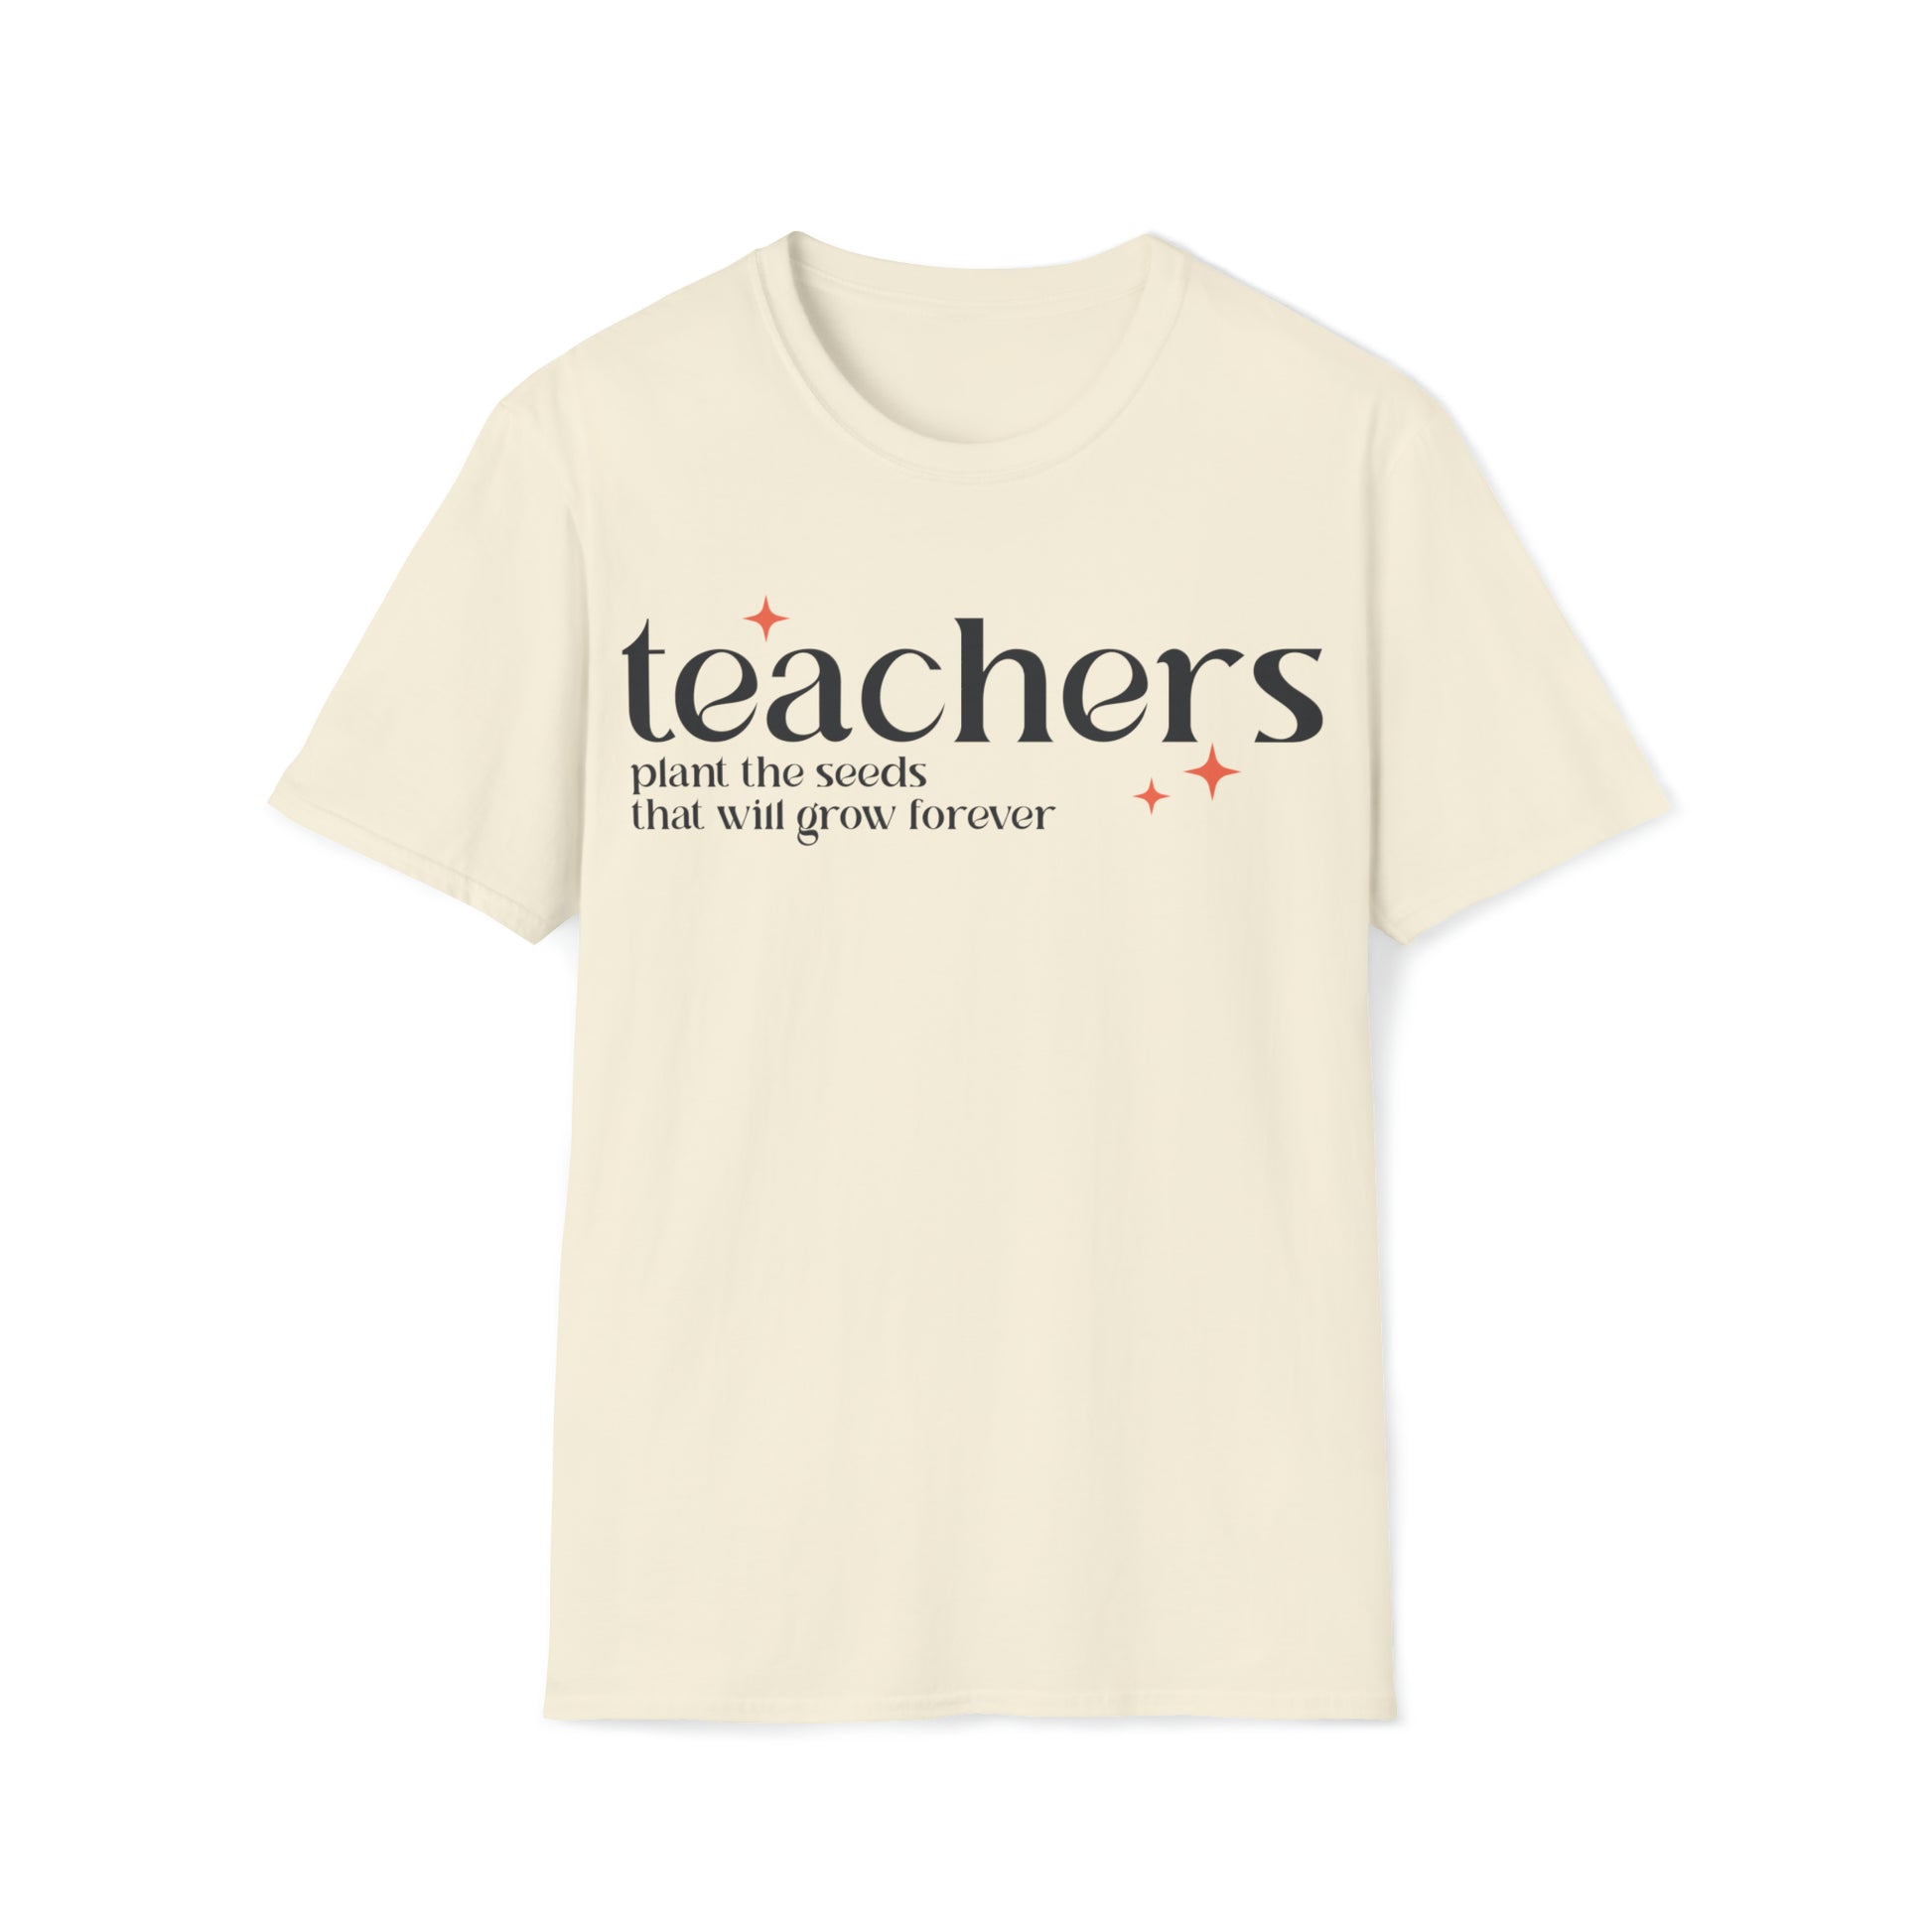 Teachers Plant Seeds That Will Grow Forever Shirt for Teachers